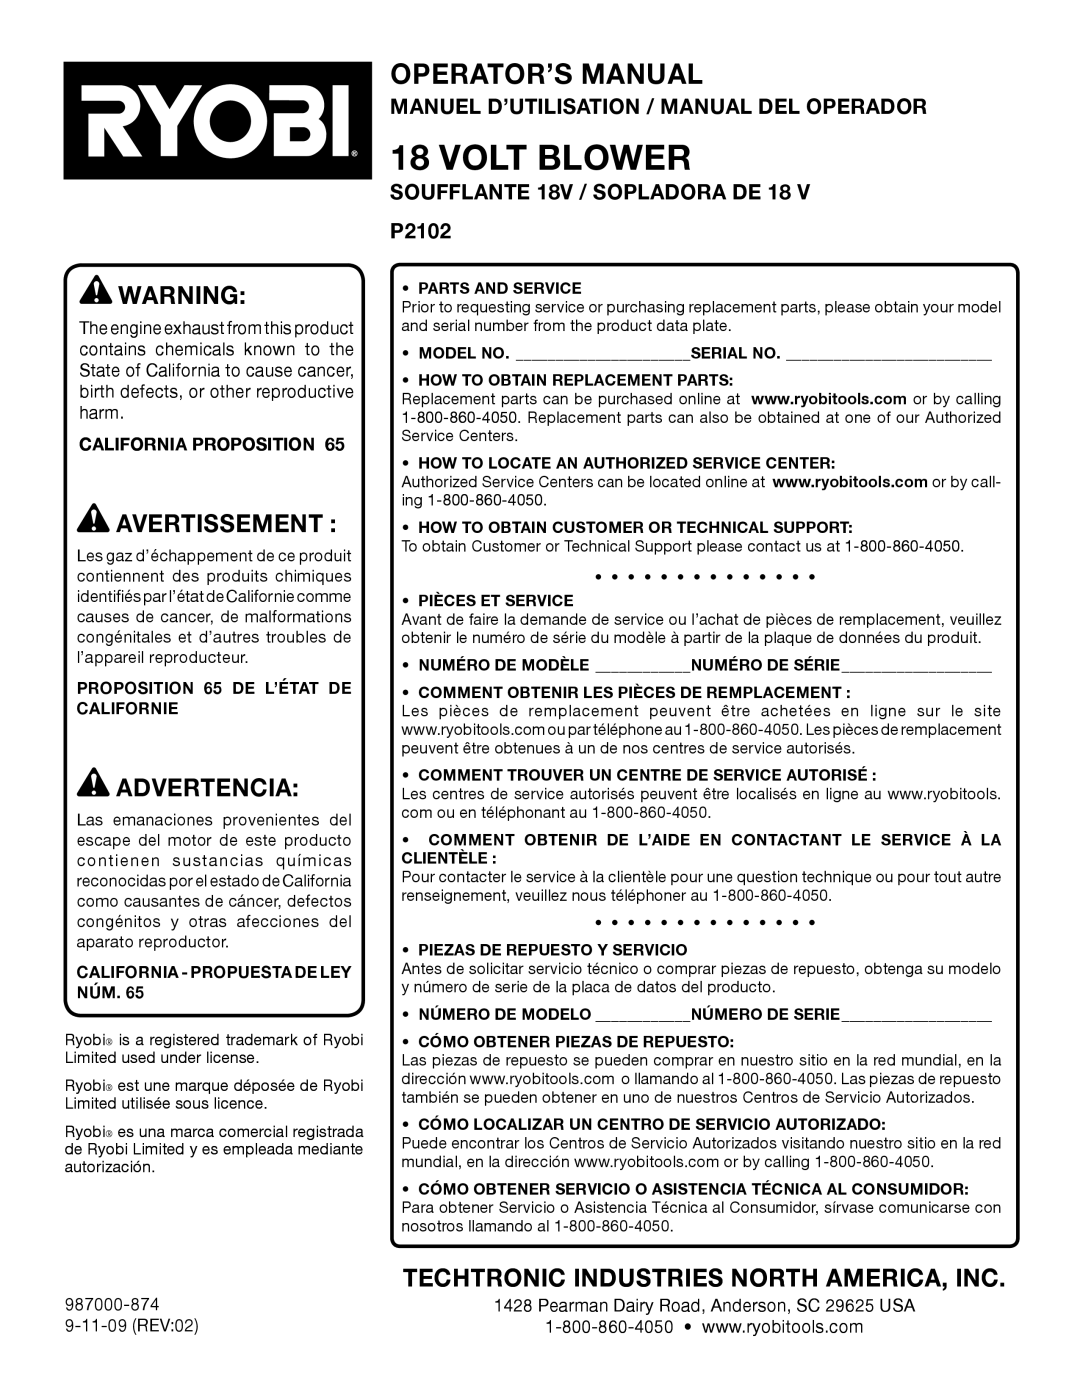 Ryobi Operator’S Manual, Manuel D’Utilisation / Manual Del Operador, SOUFFLANTE 18V / SOPLADORA DE 18 P2102 